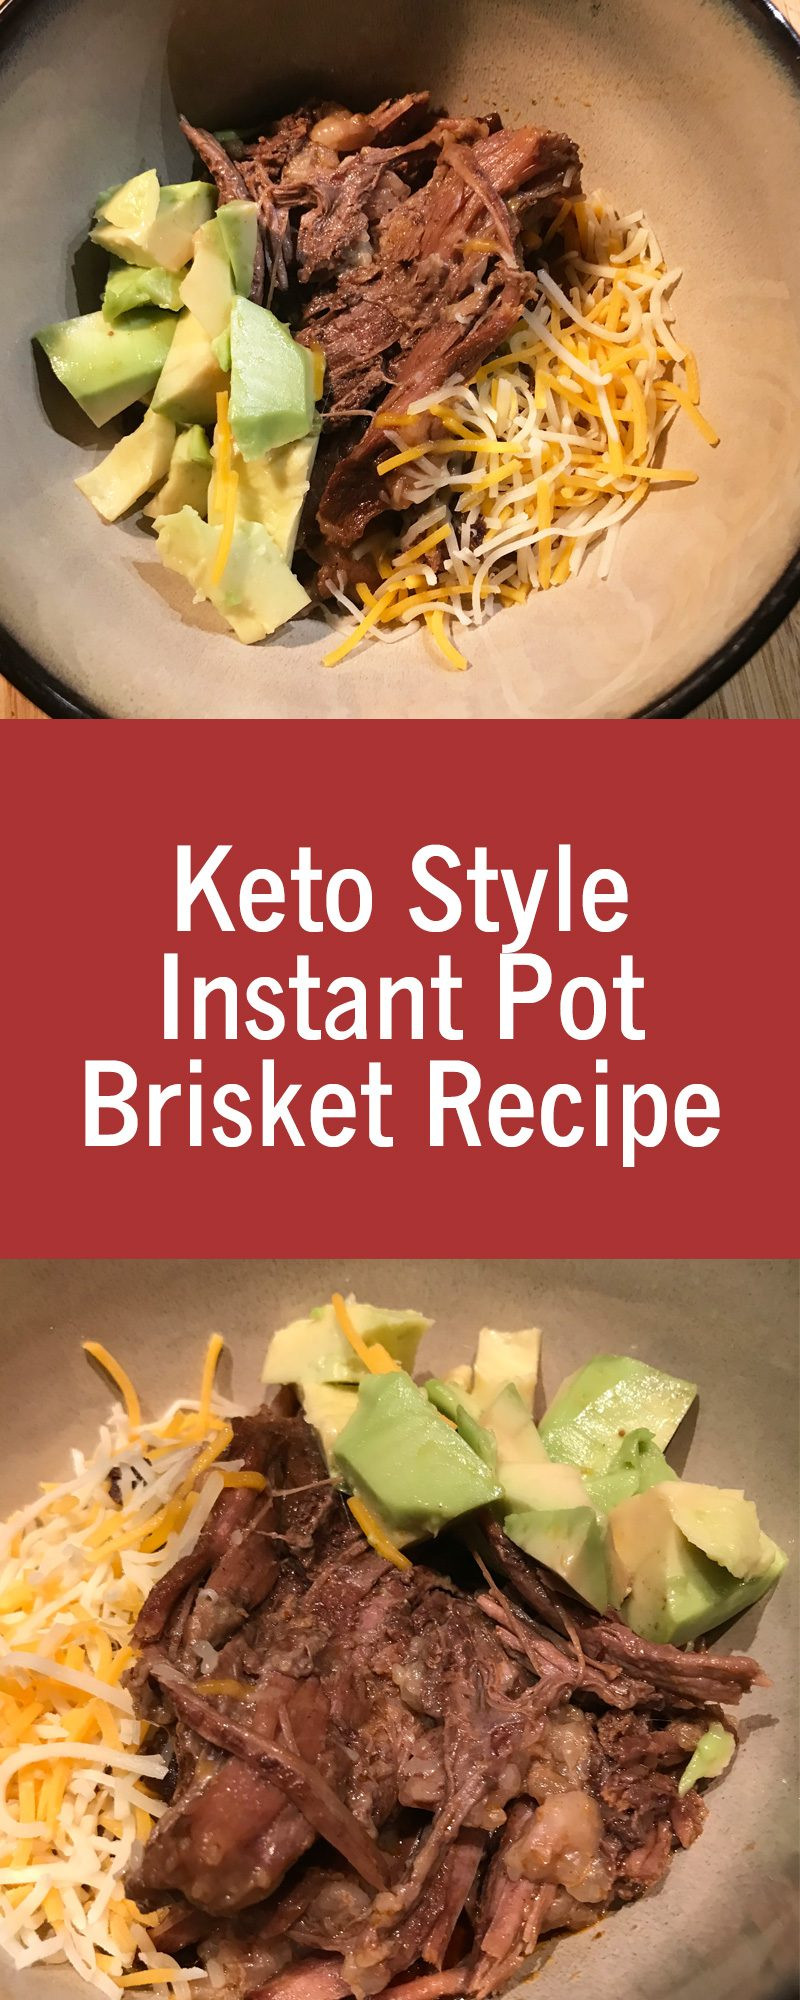 Brisket Crock Pot Keto
 Keto Style Instant Pot Brisket Recipe